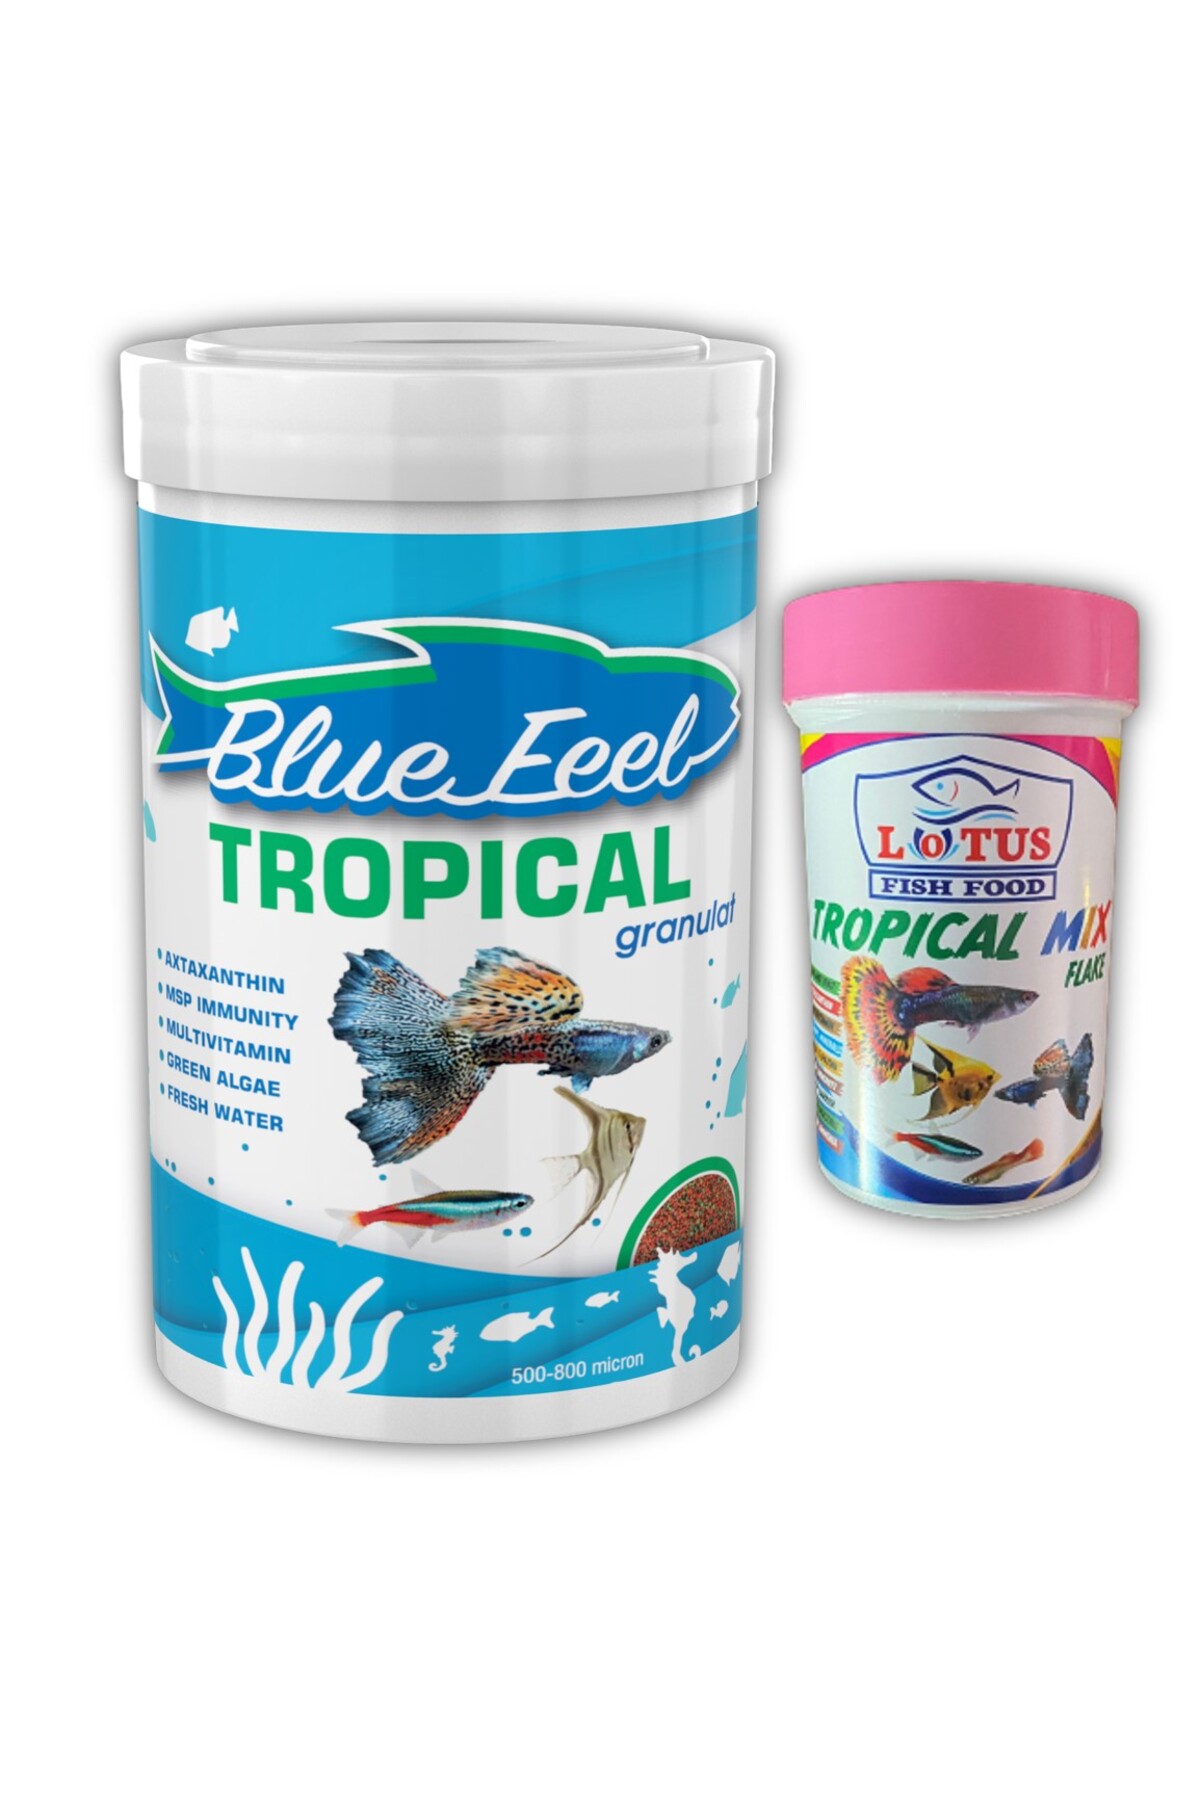 Blue Feel Tropical Mix Granulat 1000ml Granul, Lotus Tropical Mix Flakes Pul 100ml Balik Yemi